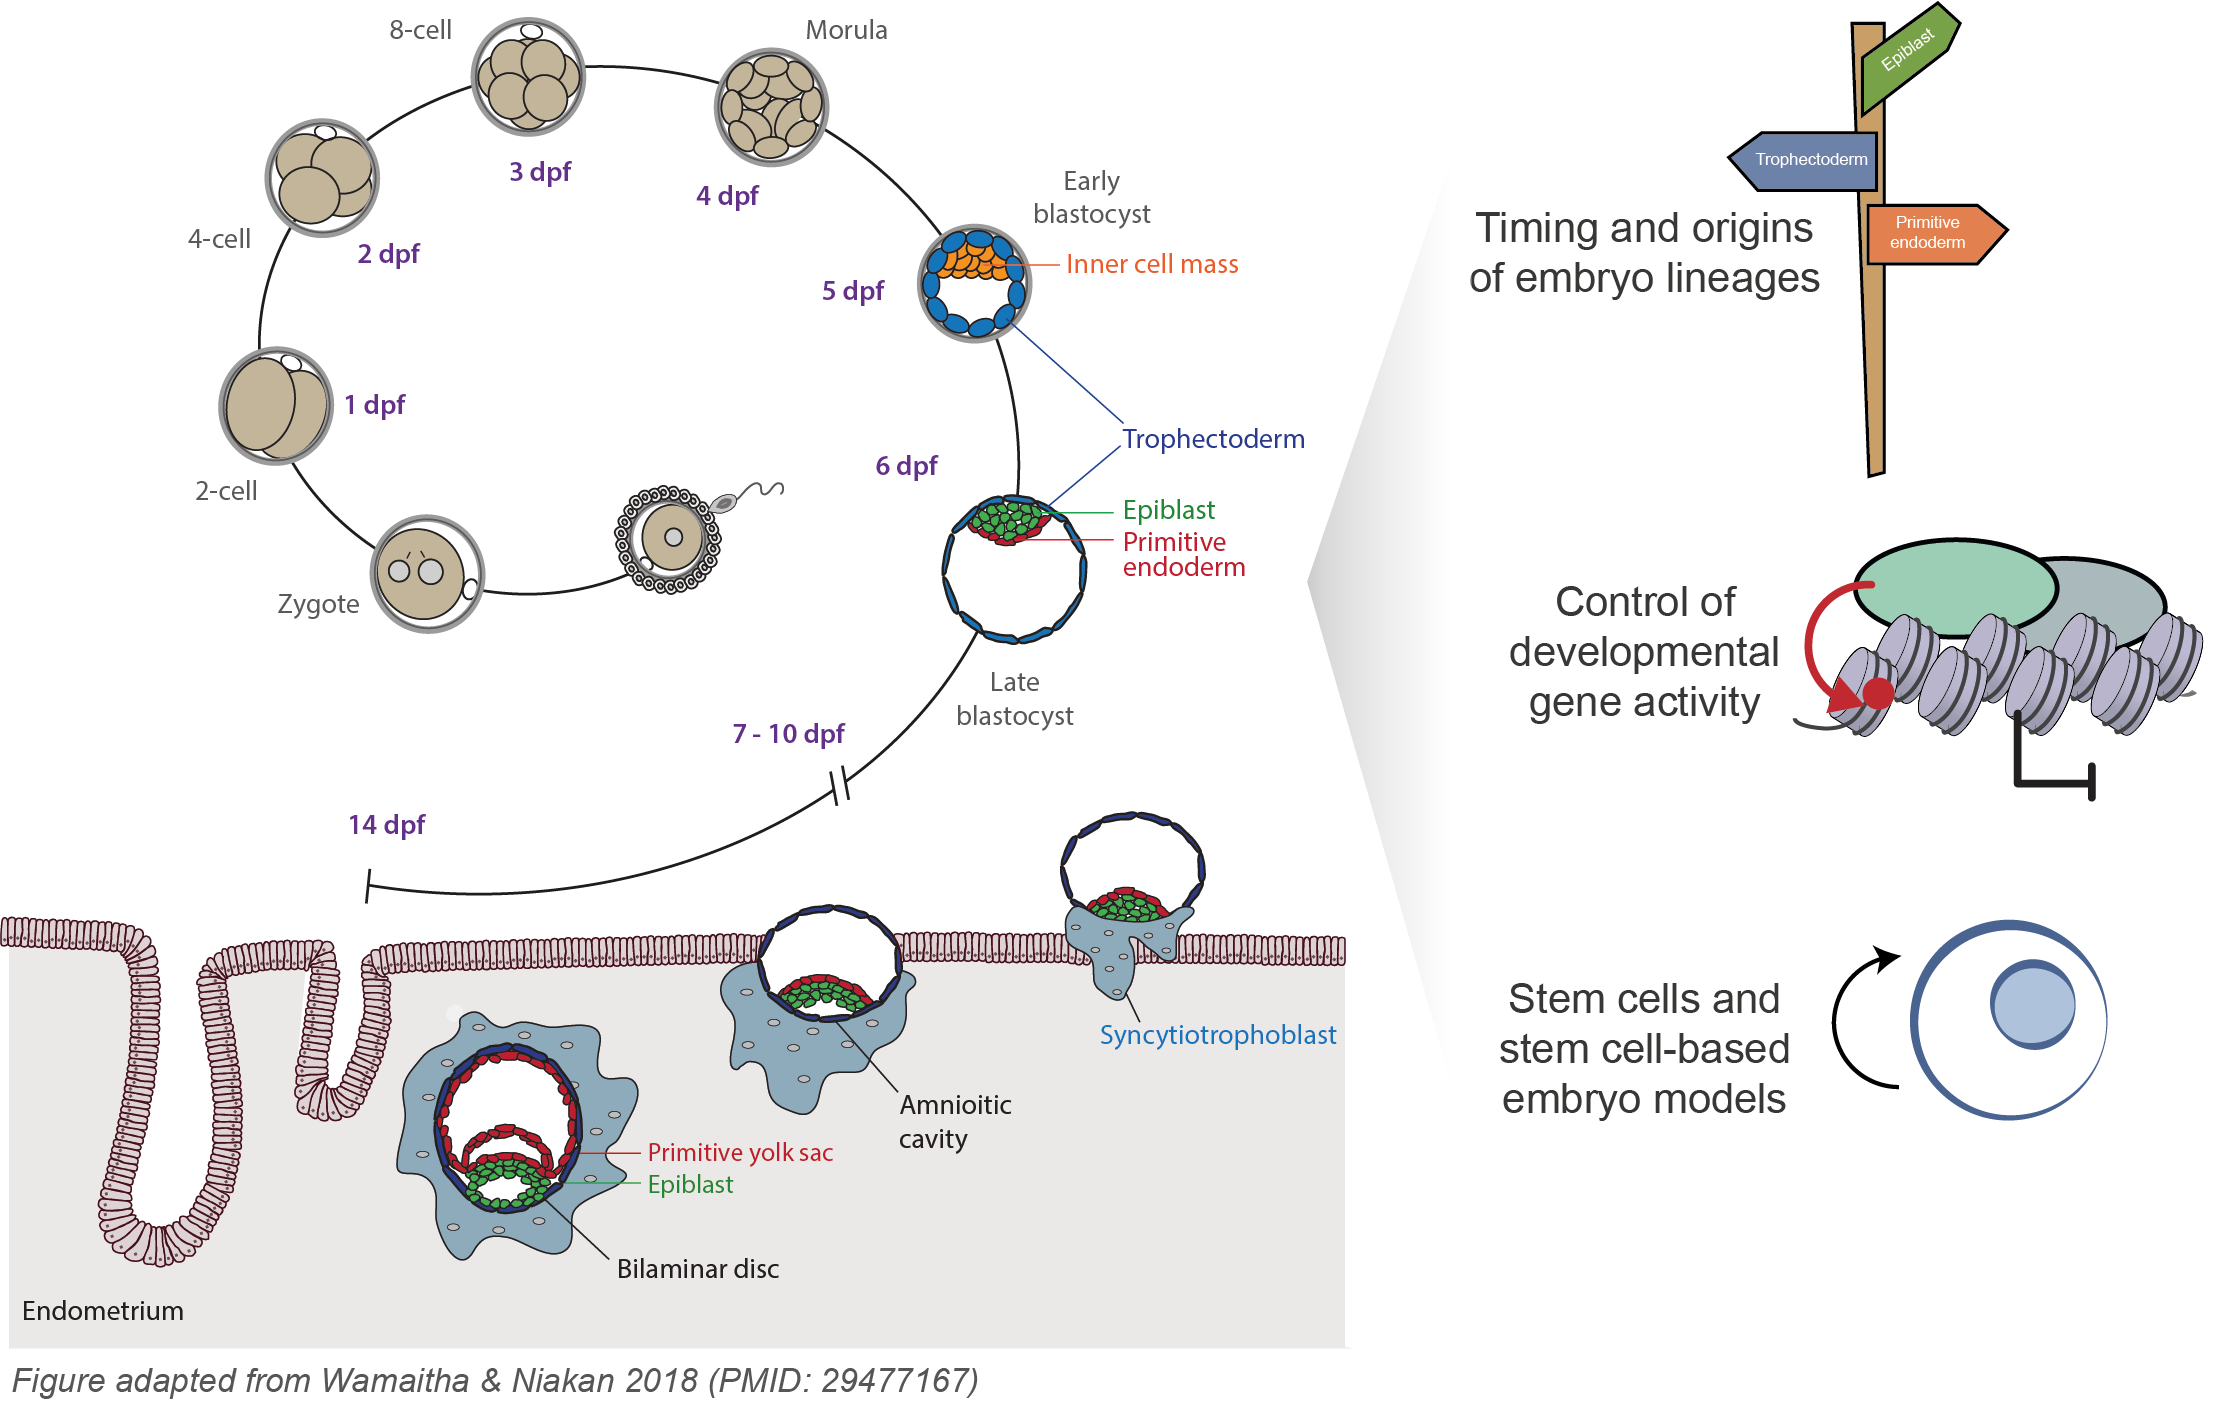 Pluripotent epiblast cells in the human embryo